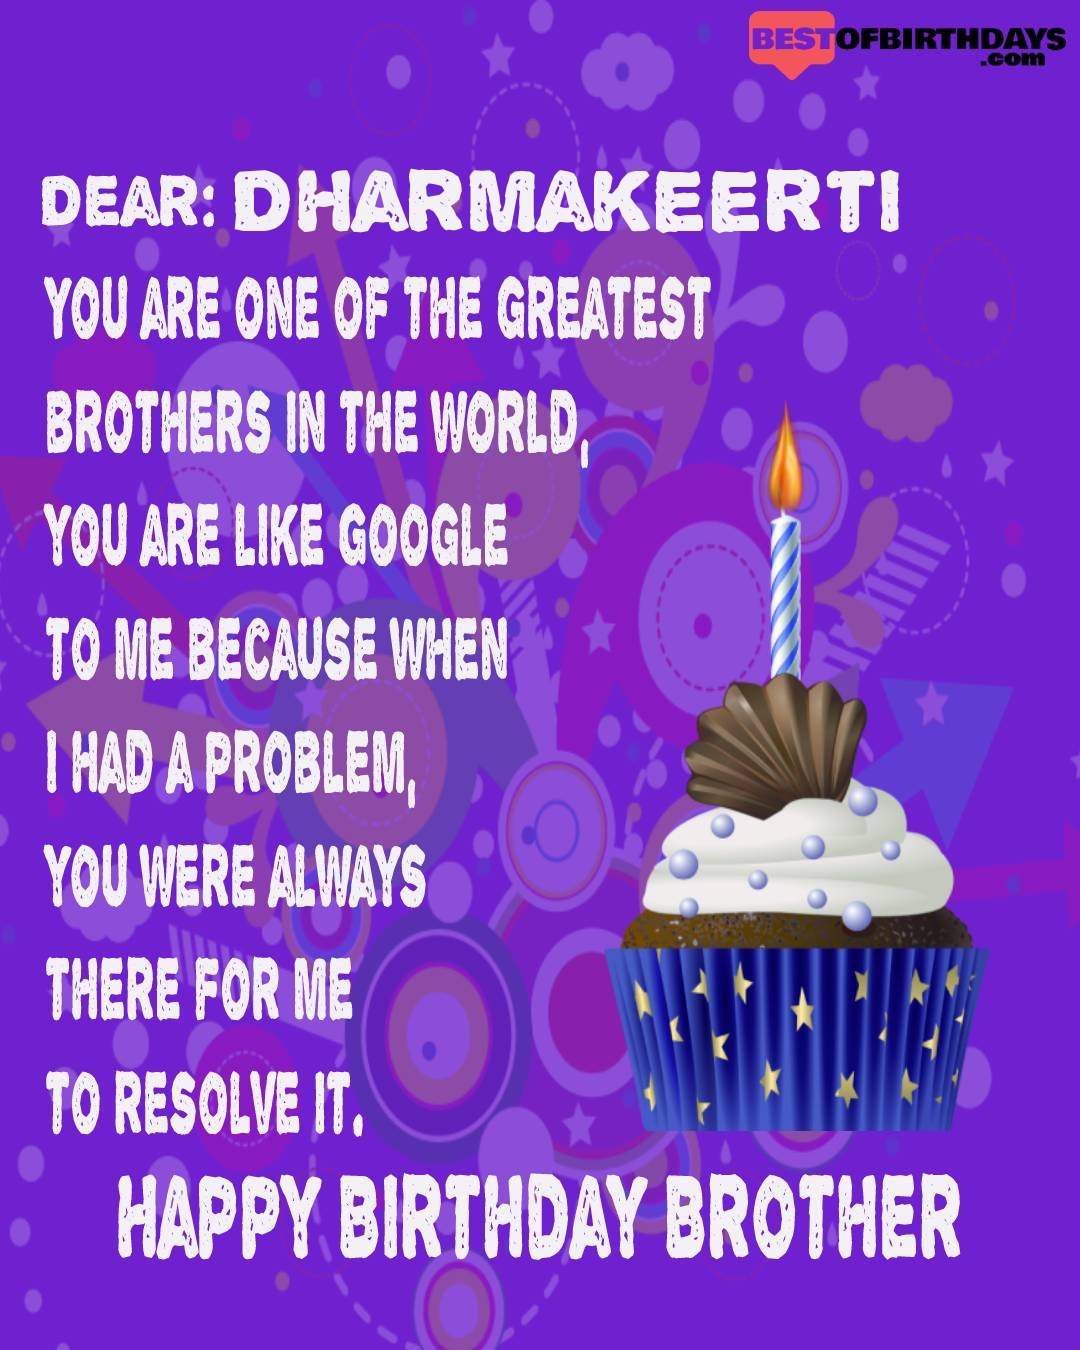 Happy birthday dharmakeerti bhai brother bro